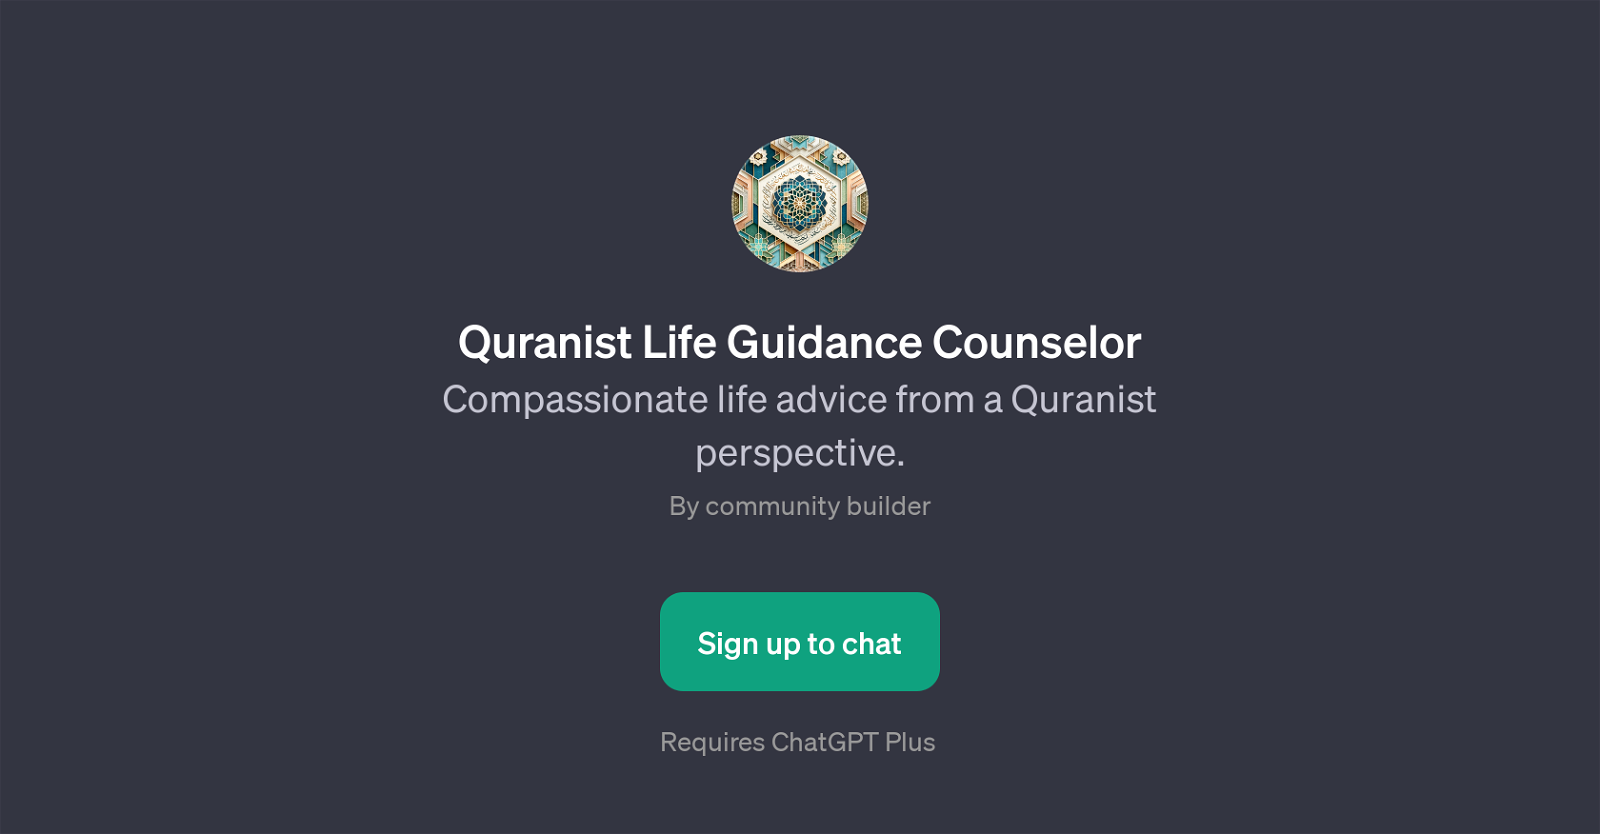 Quranist Life Guidance Counselor website